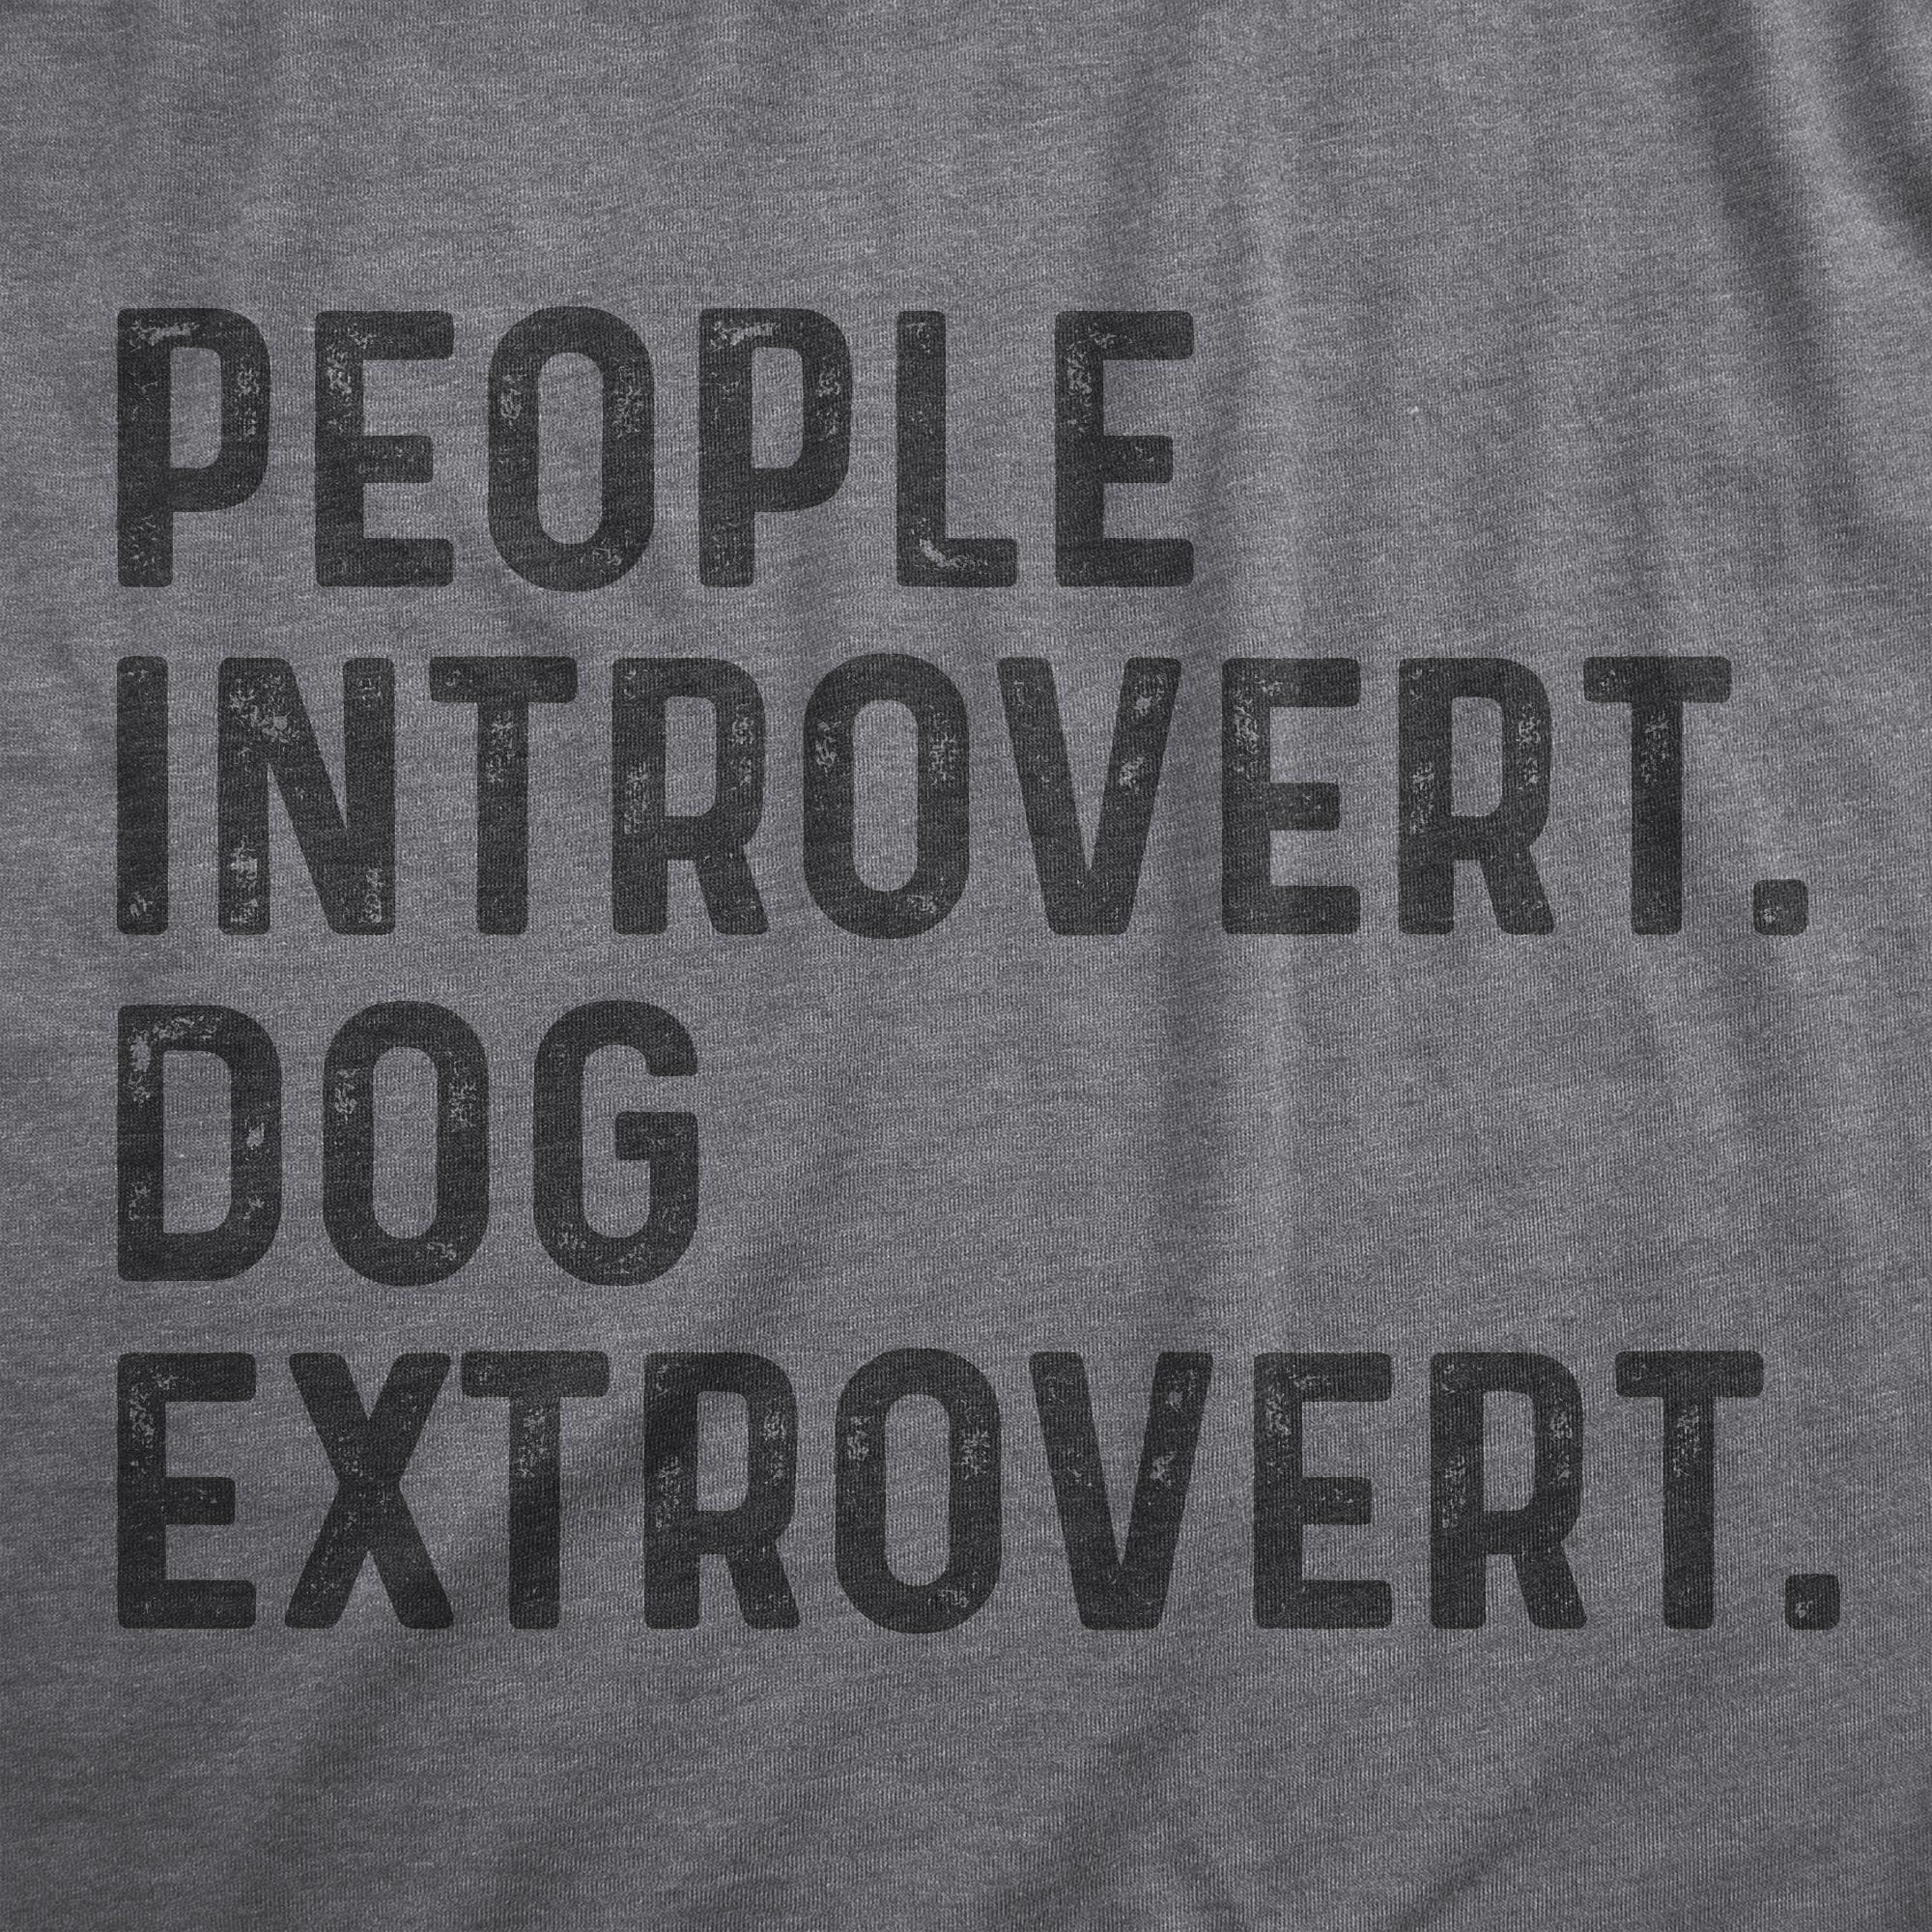 People Introvert Dog Extrovert Men's Tshirt  -  Crazy Dog T-Shirts